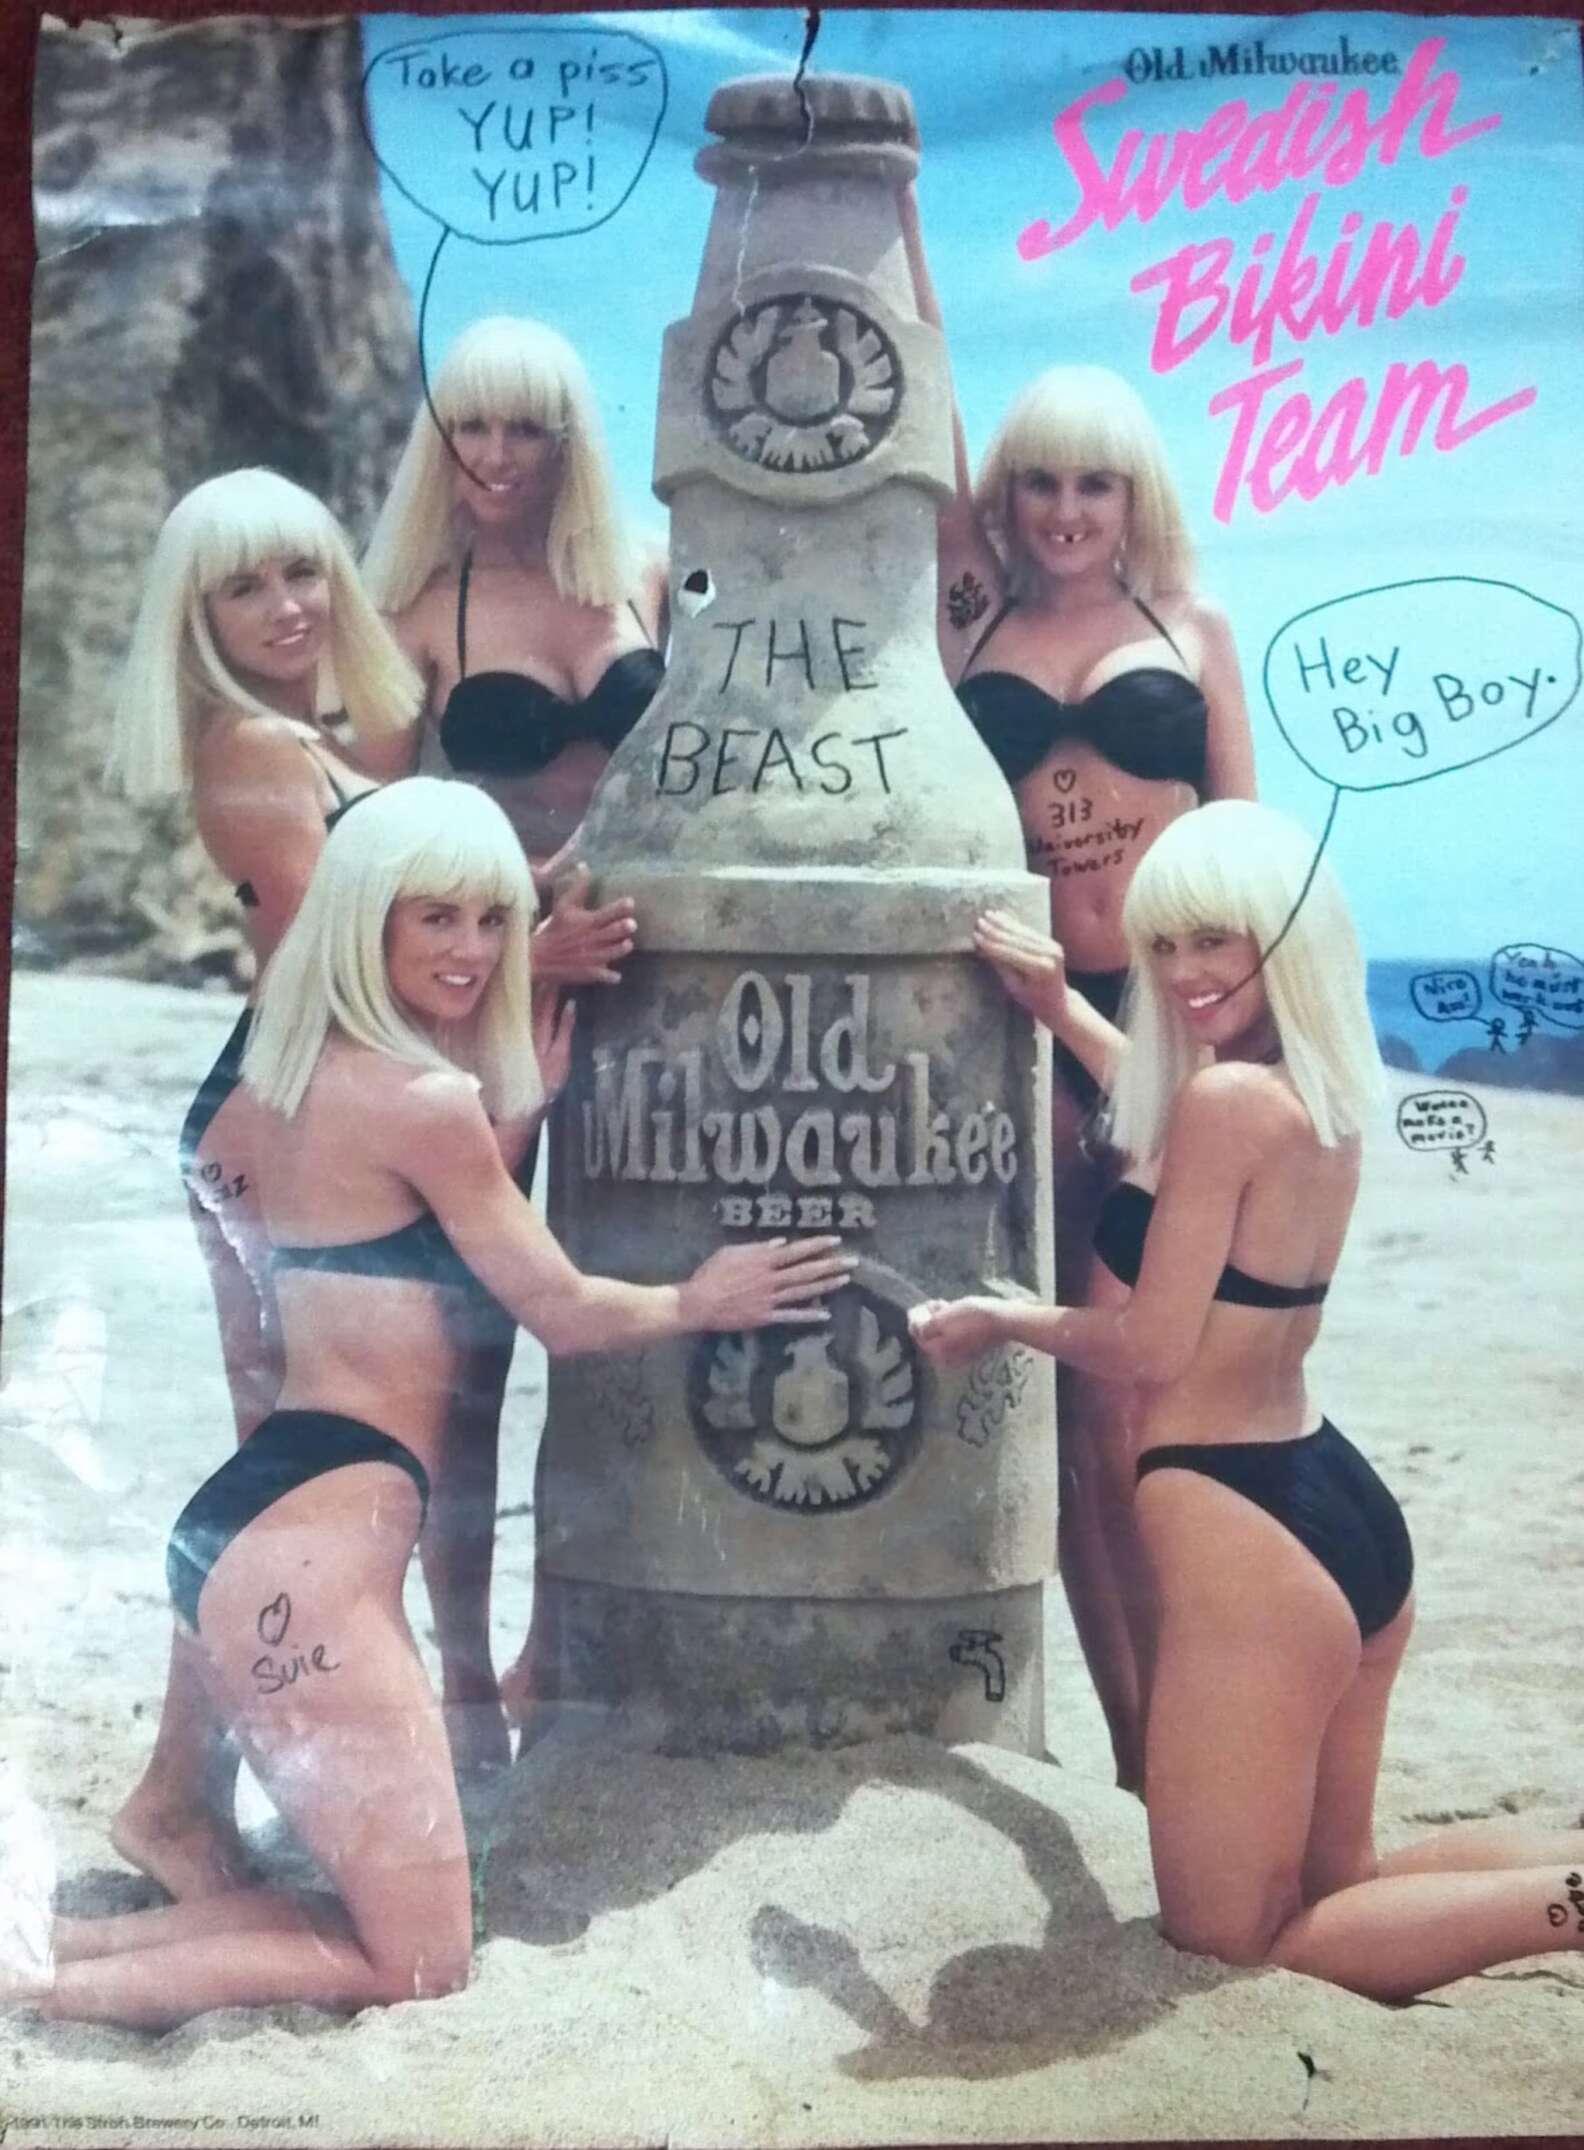 Swedish Bikini Team And Old Milwaukee Beer History Story Behind The